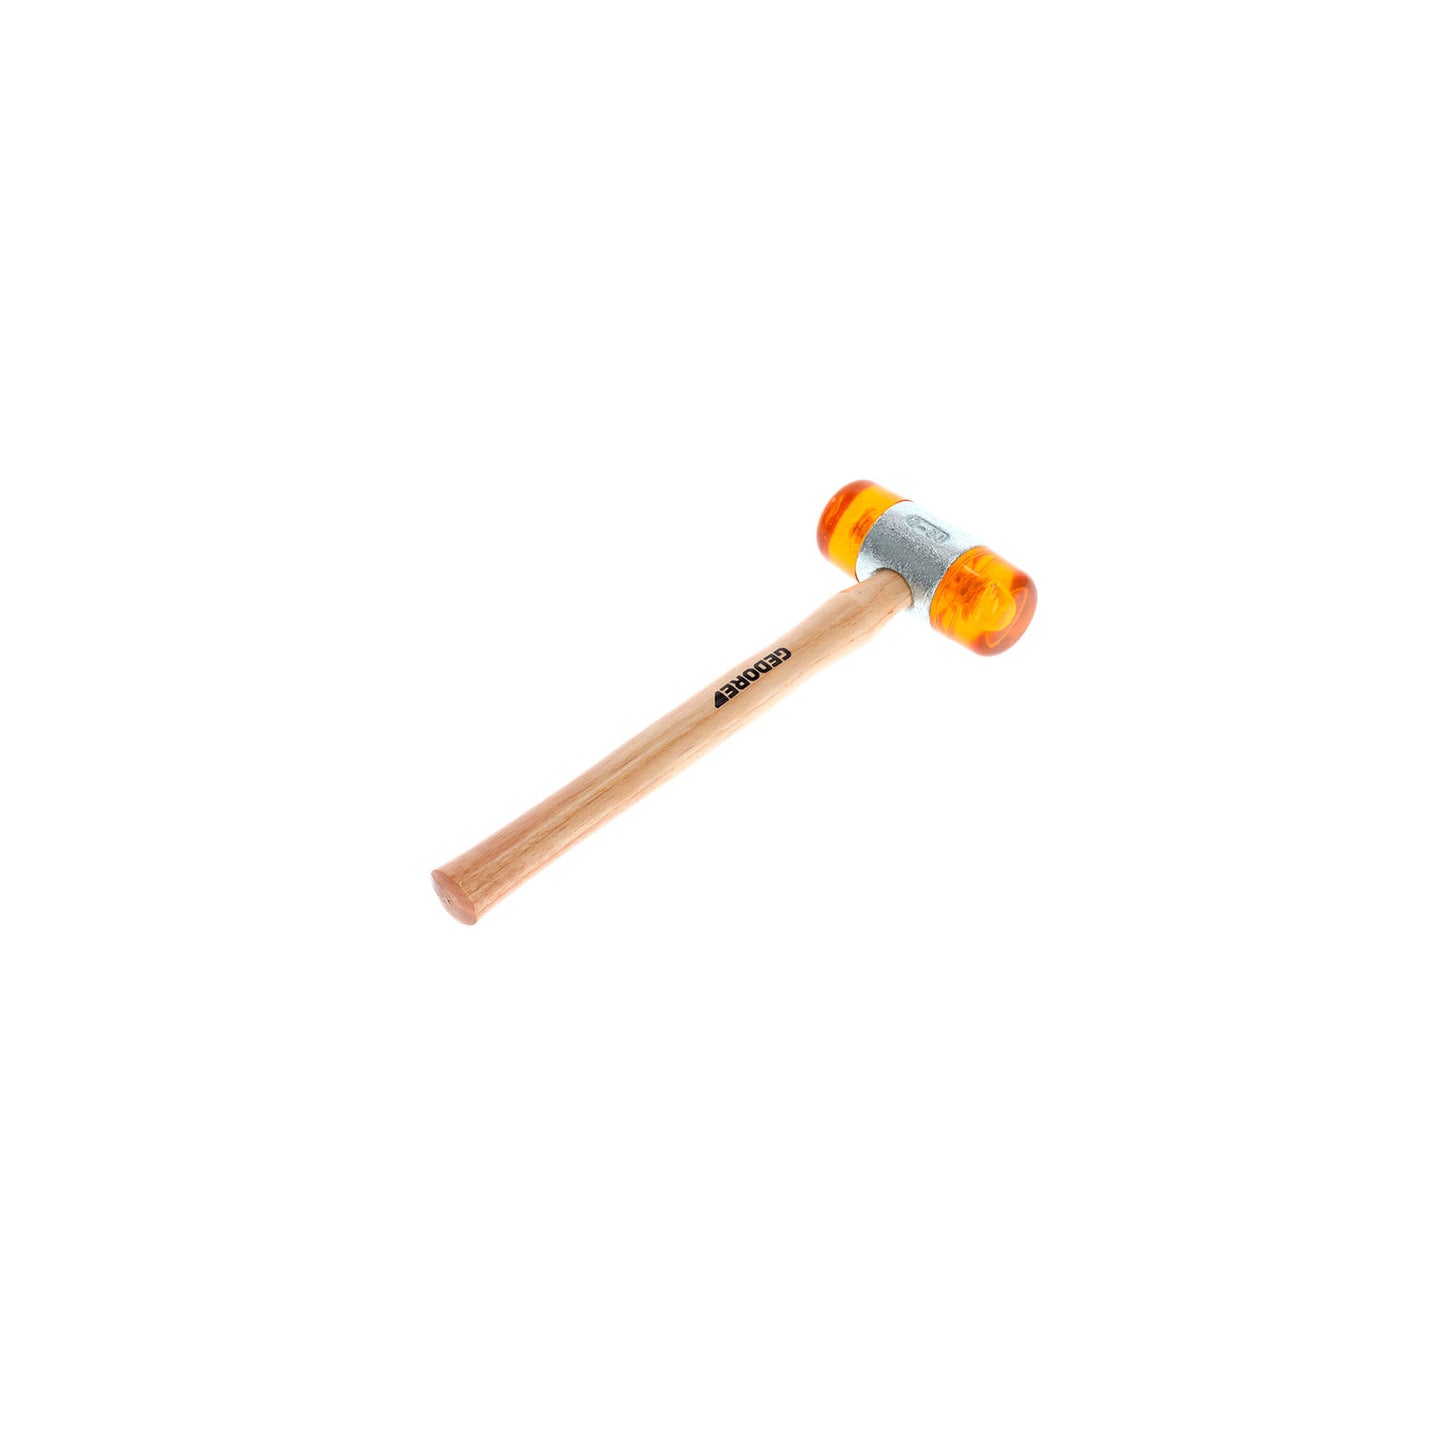 GEDORE 224 E-50 - Plastic jaw hammer d 5cm (8821860)